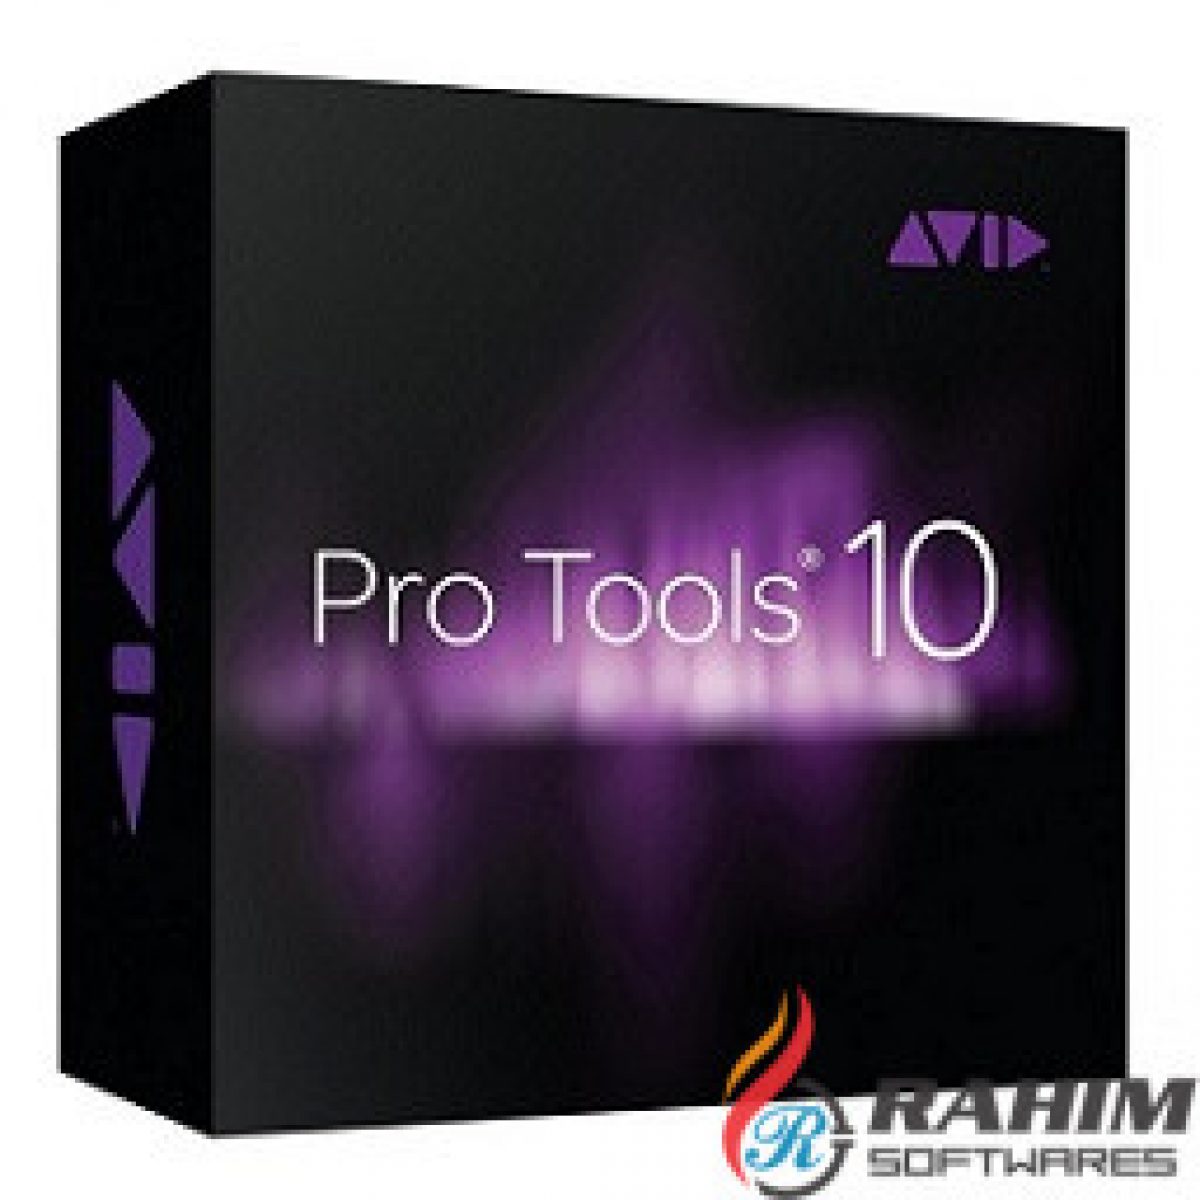 Avid pro tools 10 torrent windows